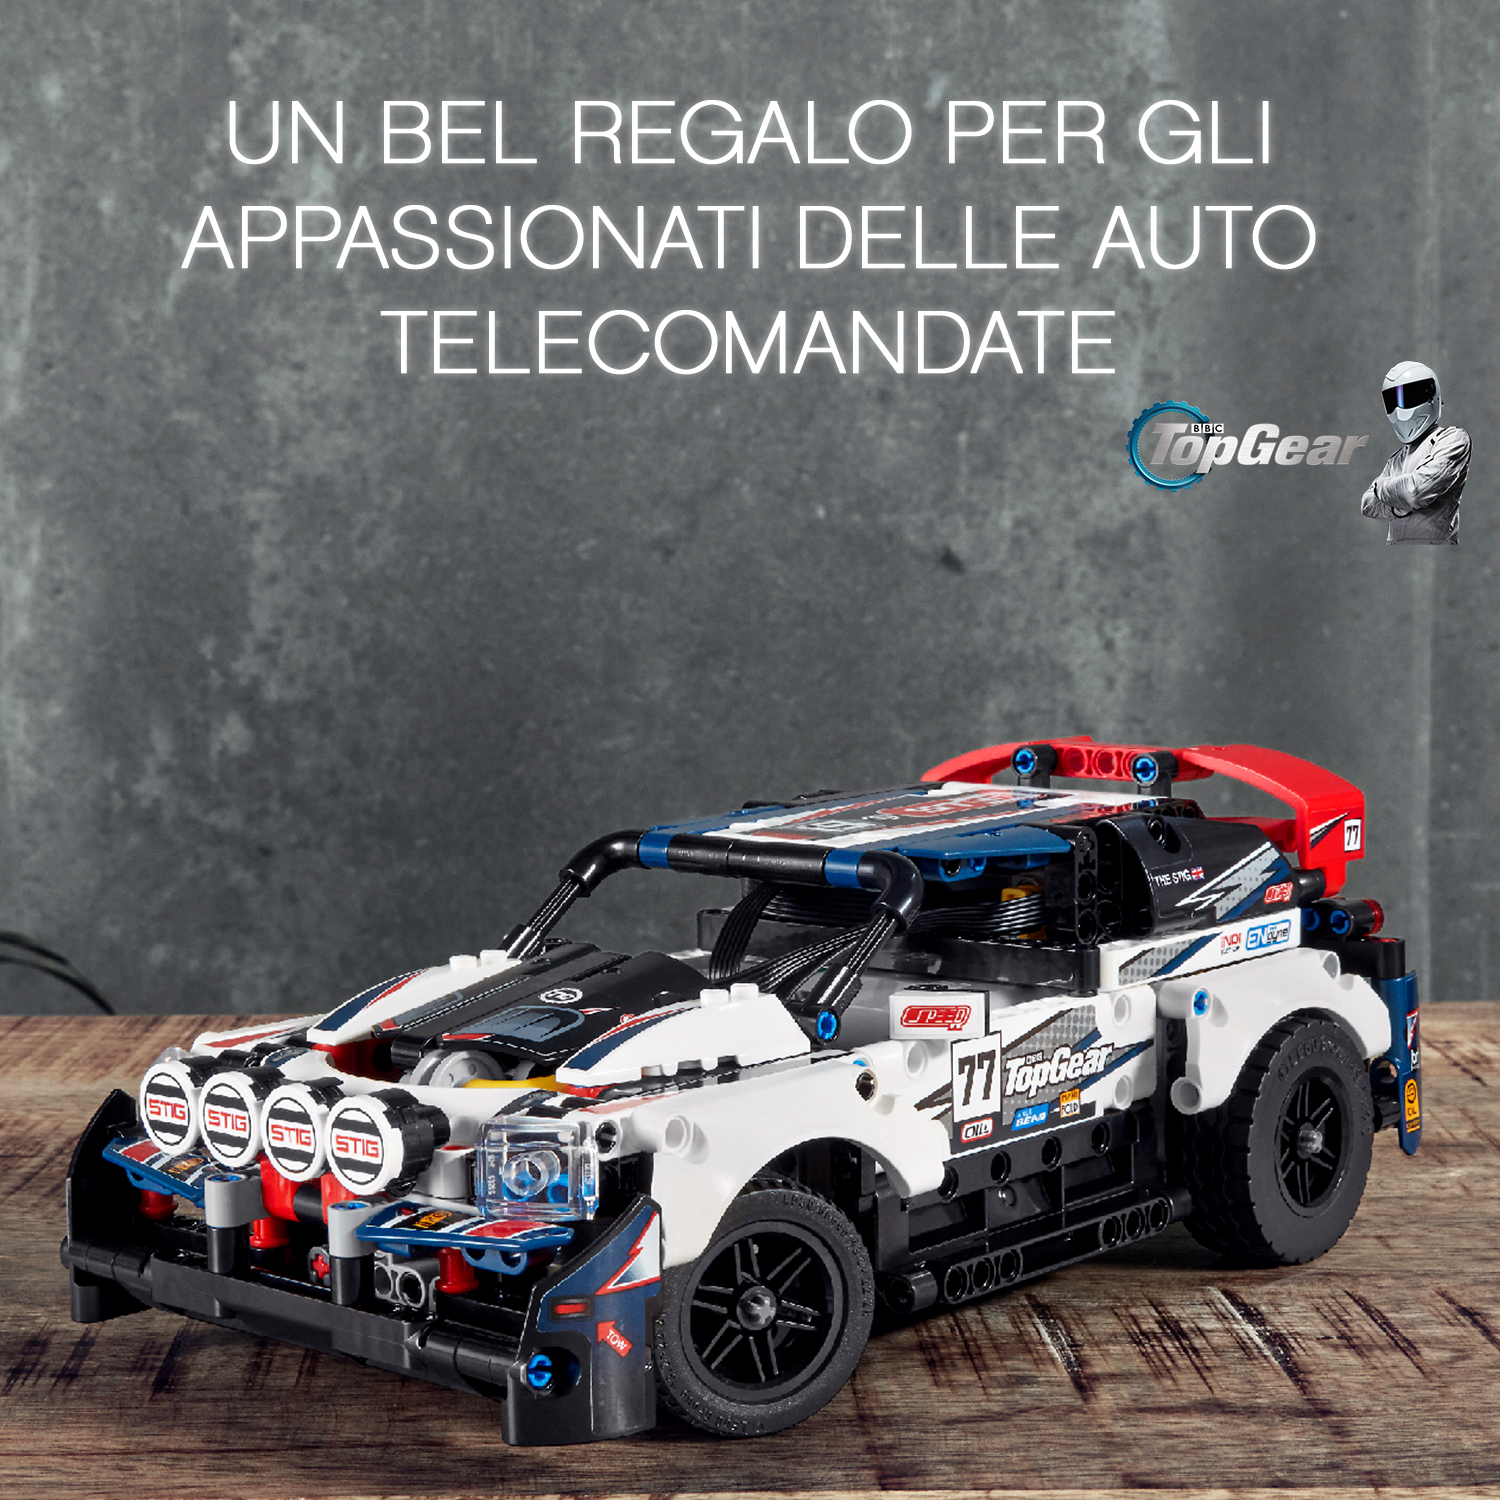 Auto da Rally Top Gear telecomandata 42109, , large